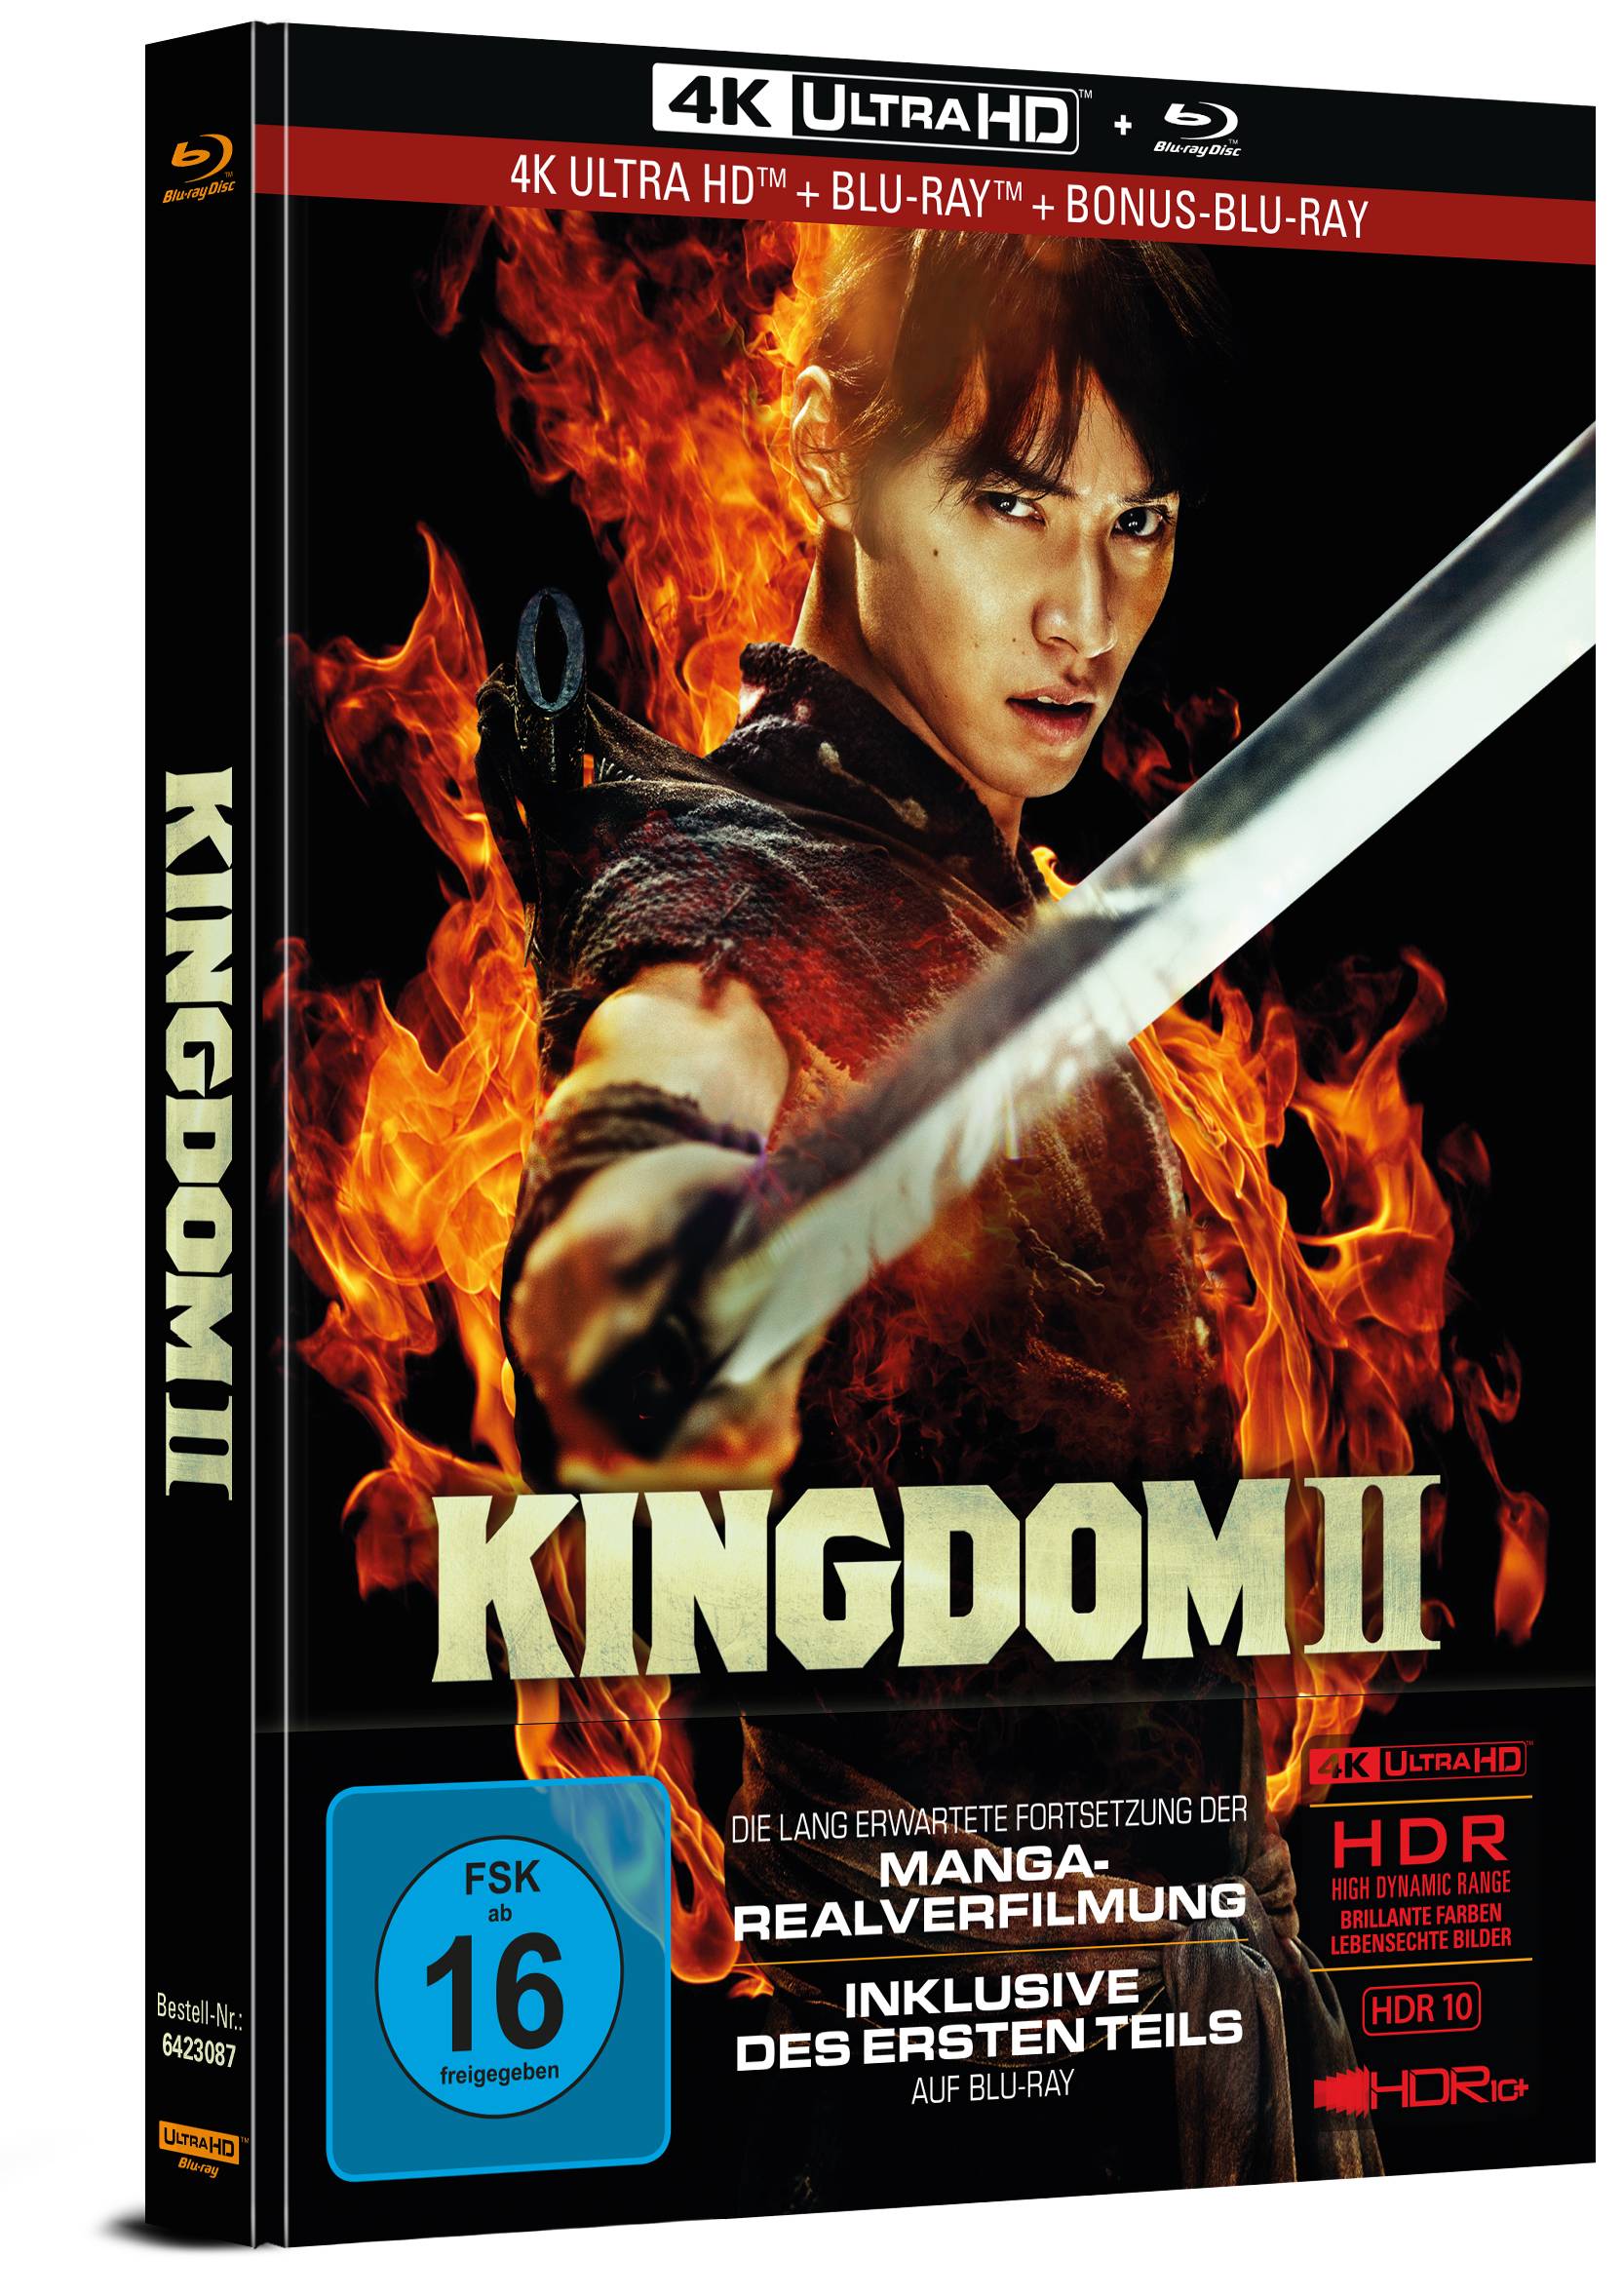 Kingdom 2 - Far and Away - 3-Disc Limited Collector's Edition im Mediabook (UHD-Blu-ray + Blu-ray + Bonus-Blu-ray)